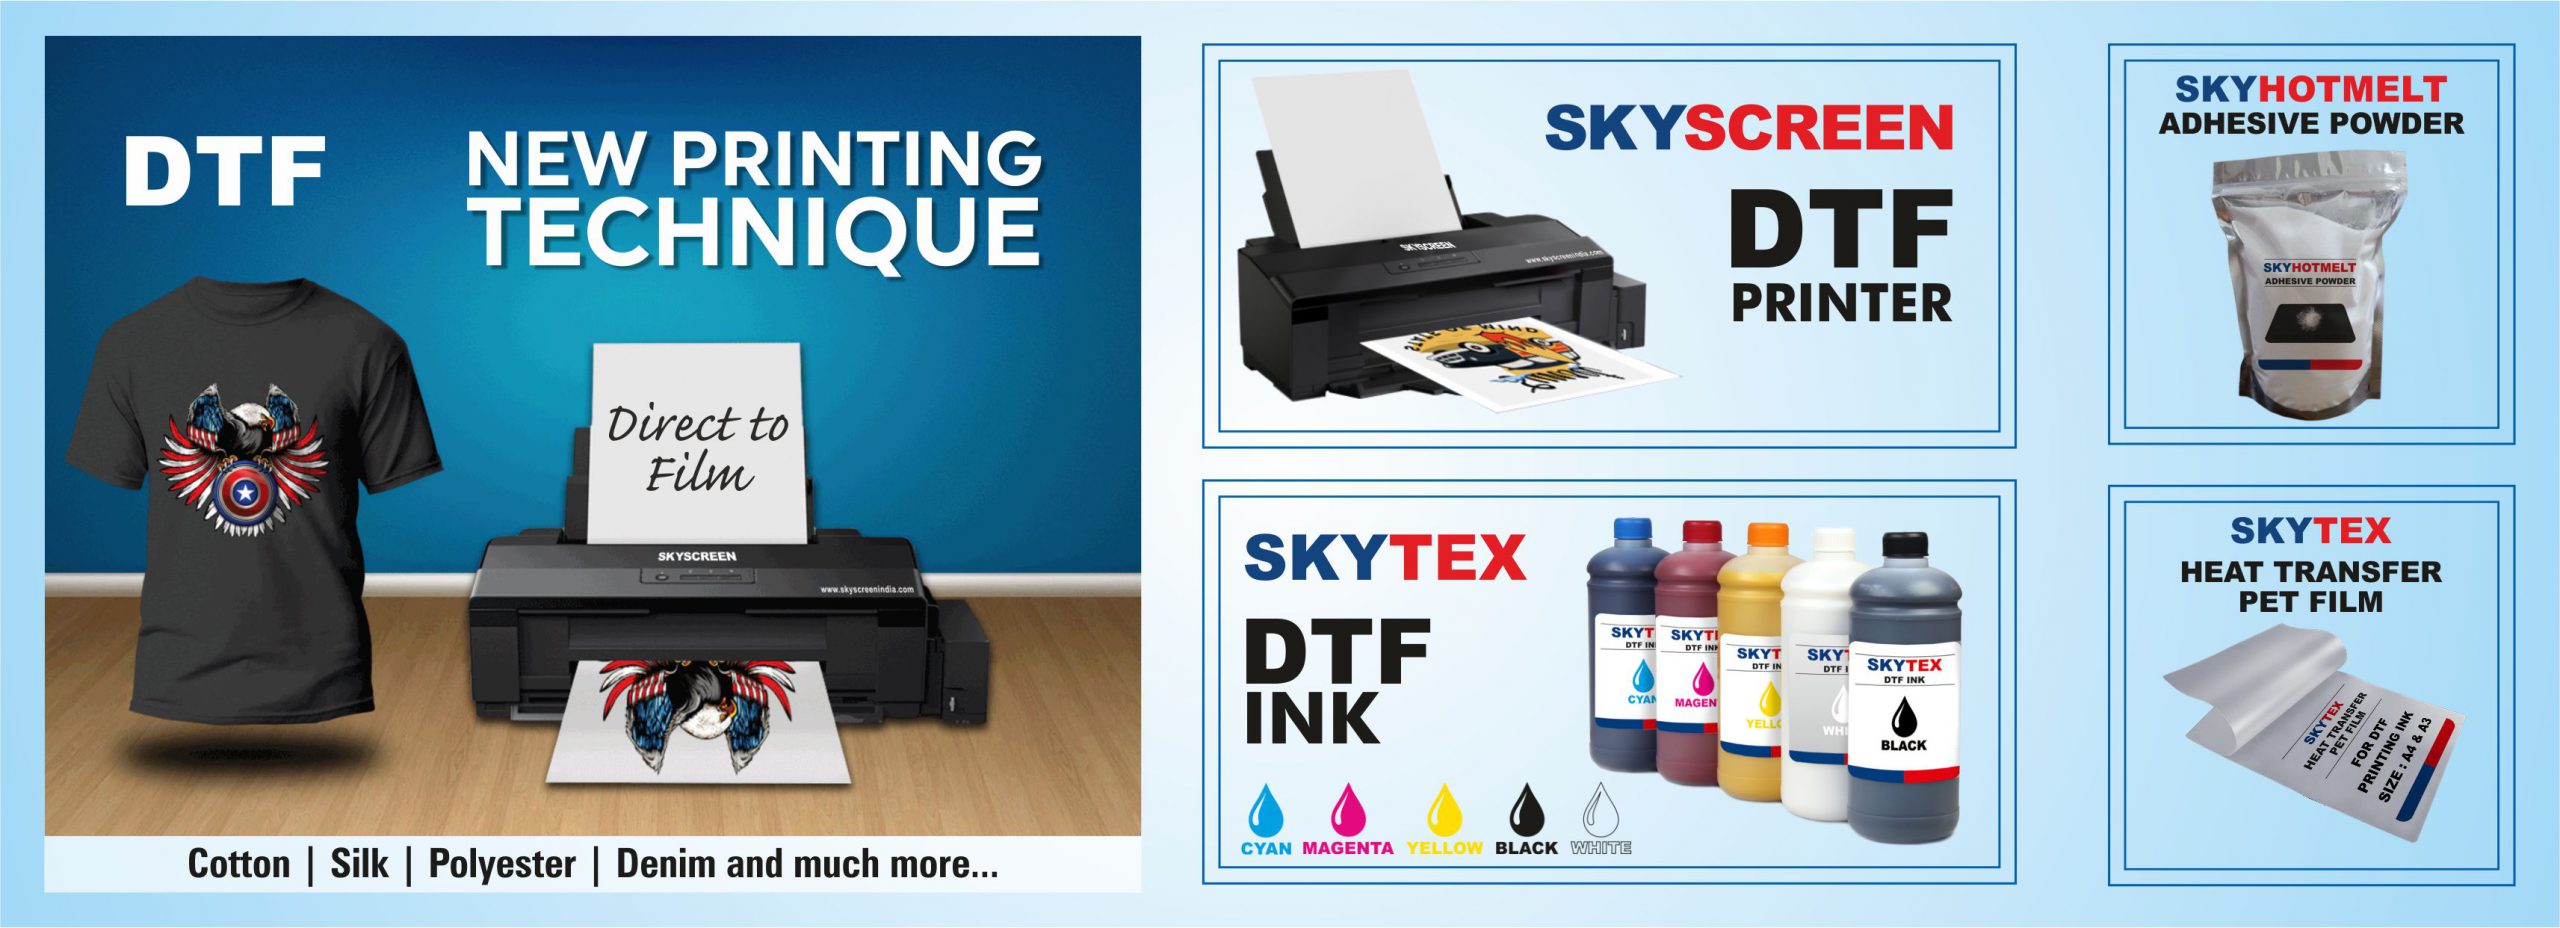 Skyscreen-DTF-Printer